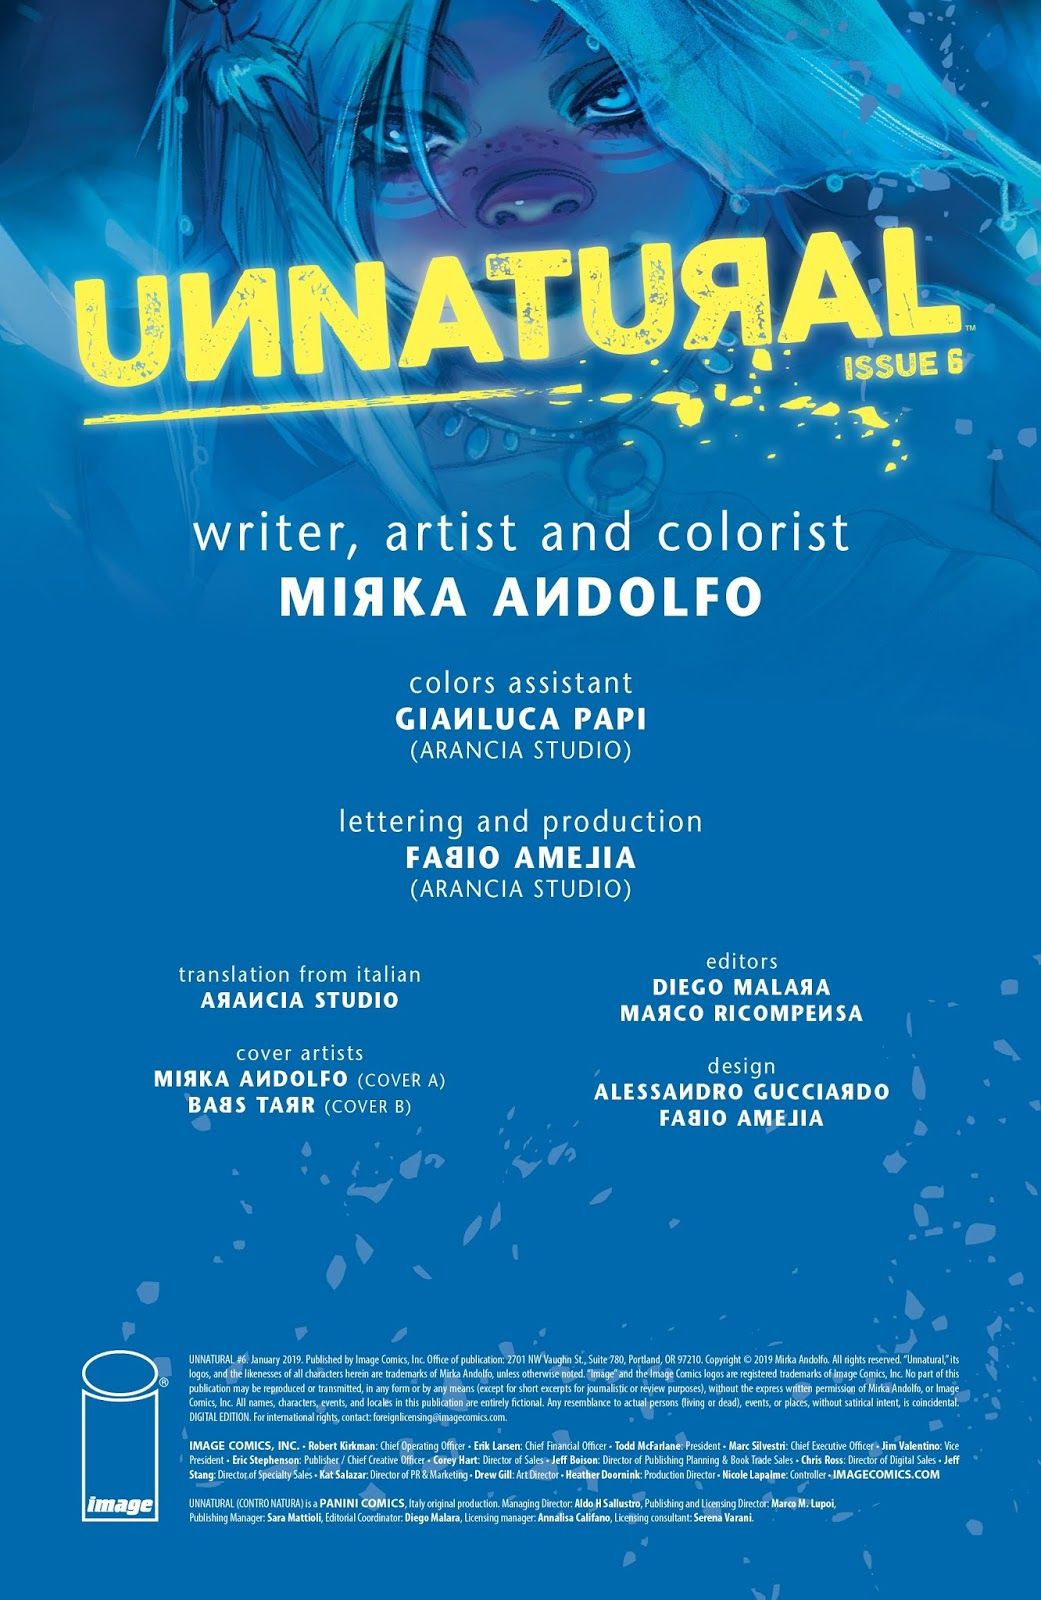 Unnatural Issue 6 by Mirka Andolfo (mirkand) page 2